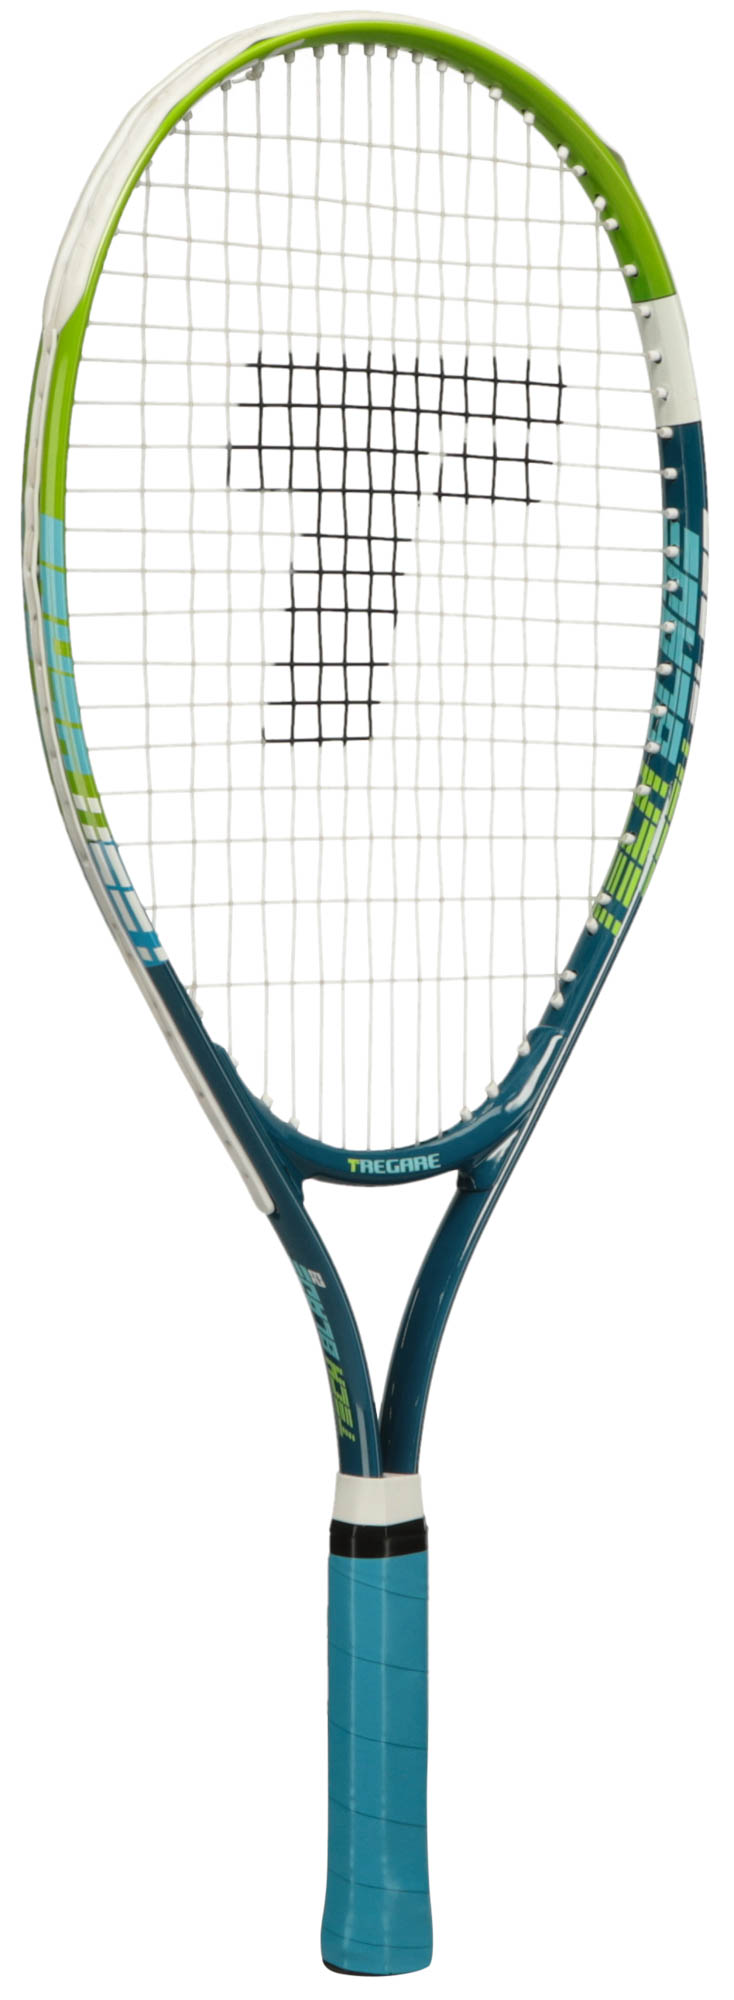 Junior tennis racquet